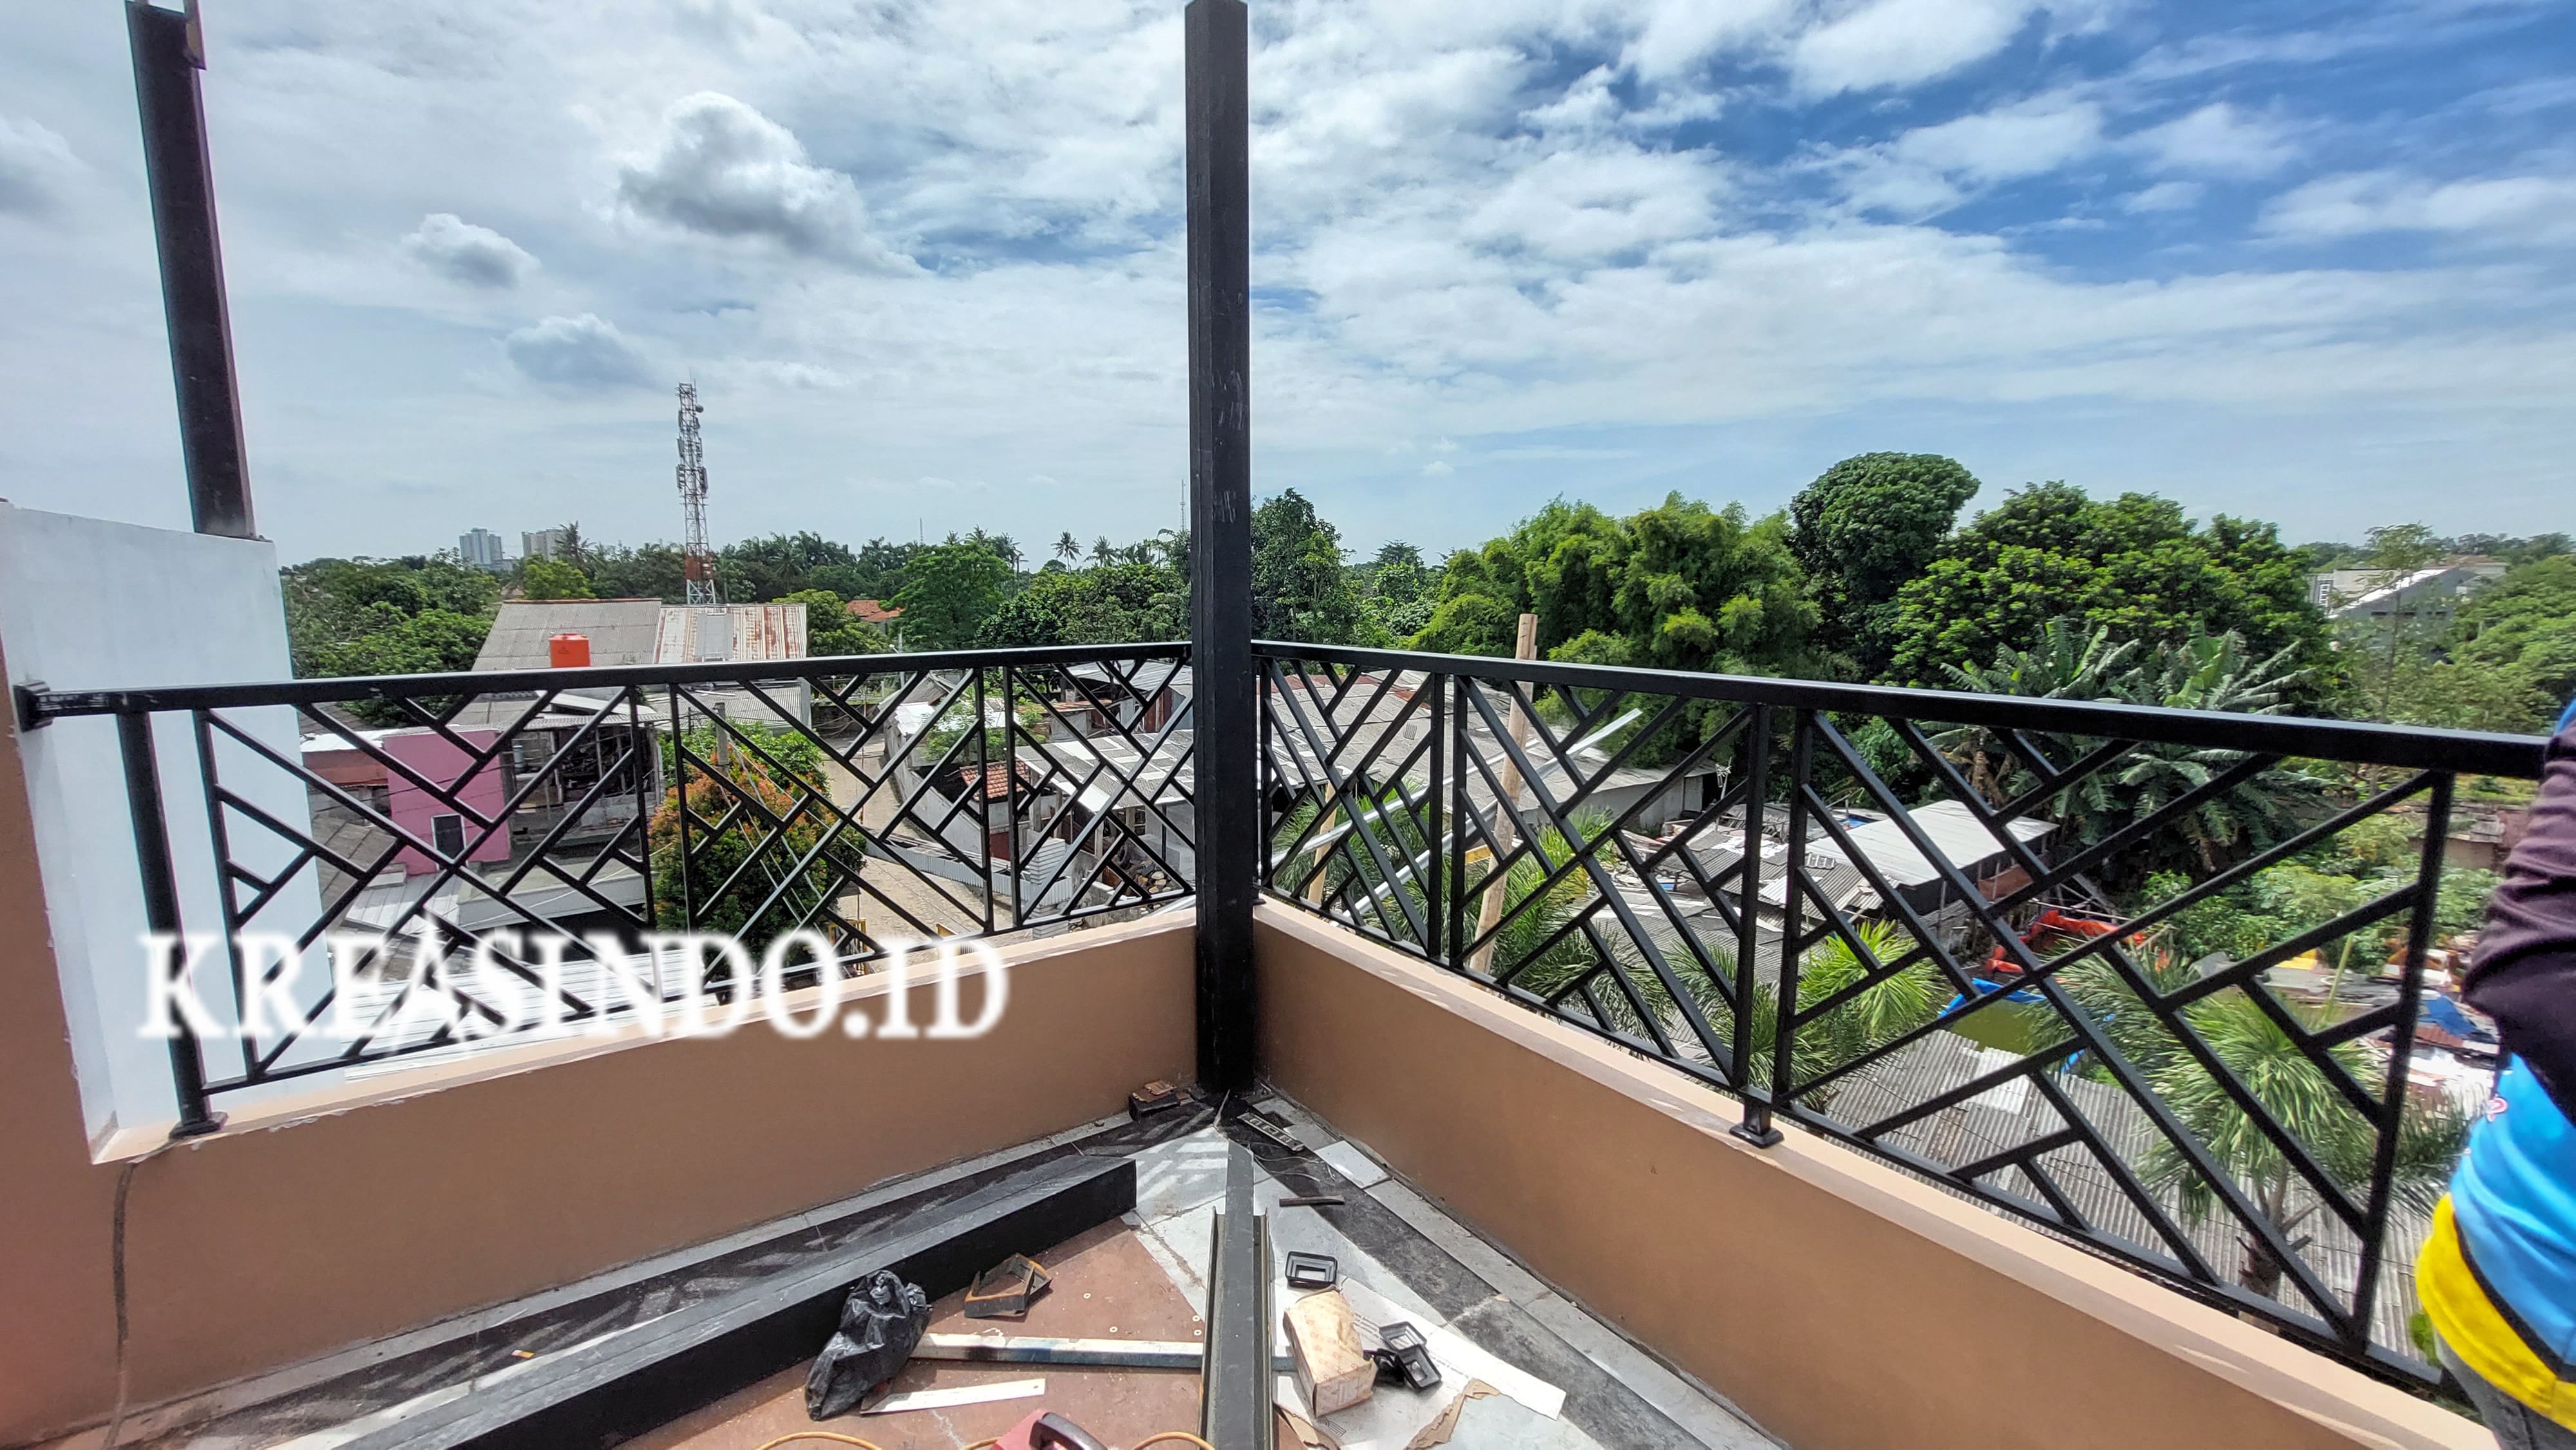 Balkon Besi Minimalis Yang Terpasang di Sukatani Cimanggis Depok Ini Cocok Untuk Rumah Minimalis